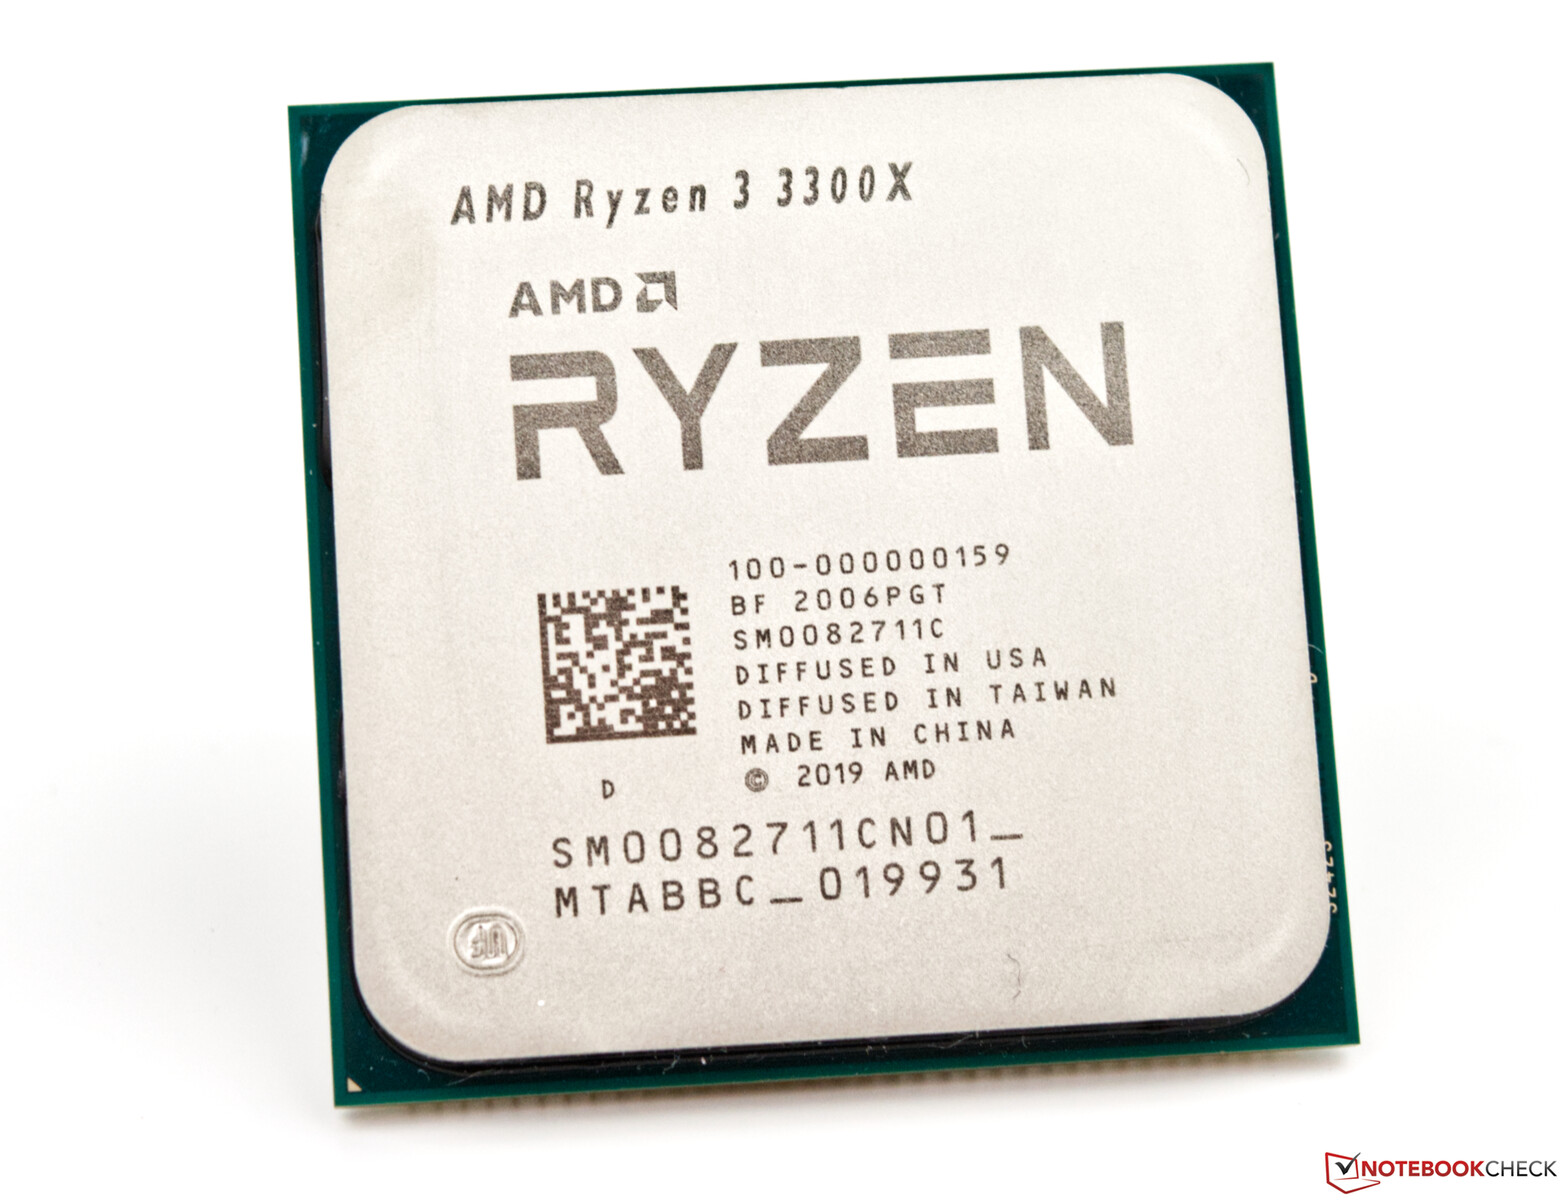 AMD Ryzen 3 3300X Processor - Benchmarks and Specs - NotebookCheck.net Tech